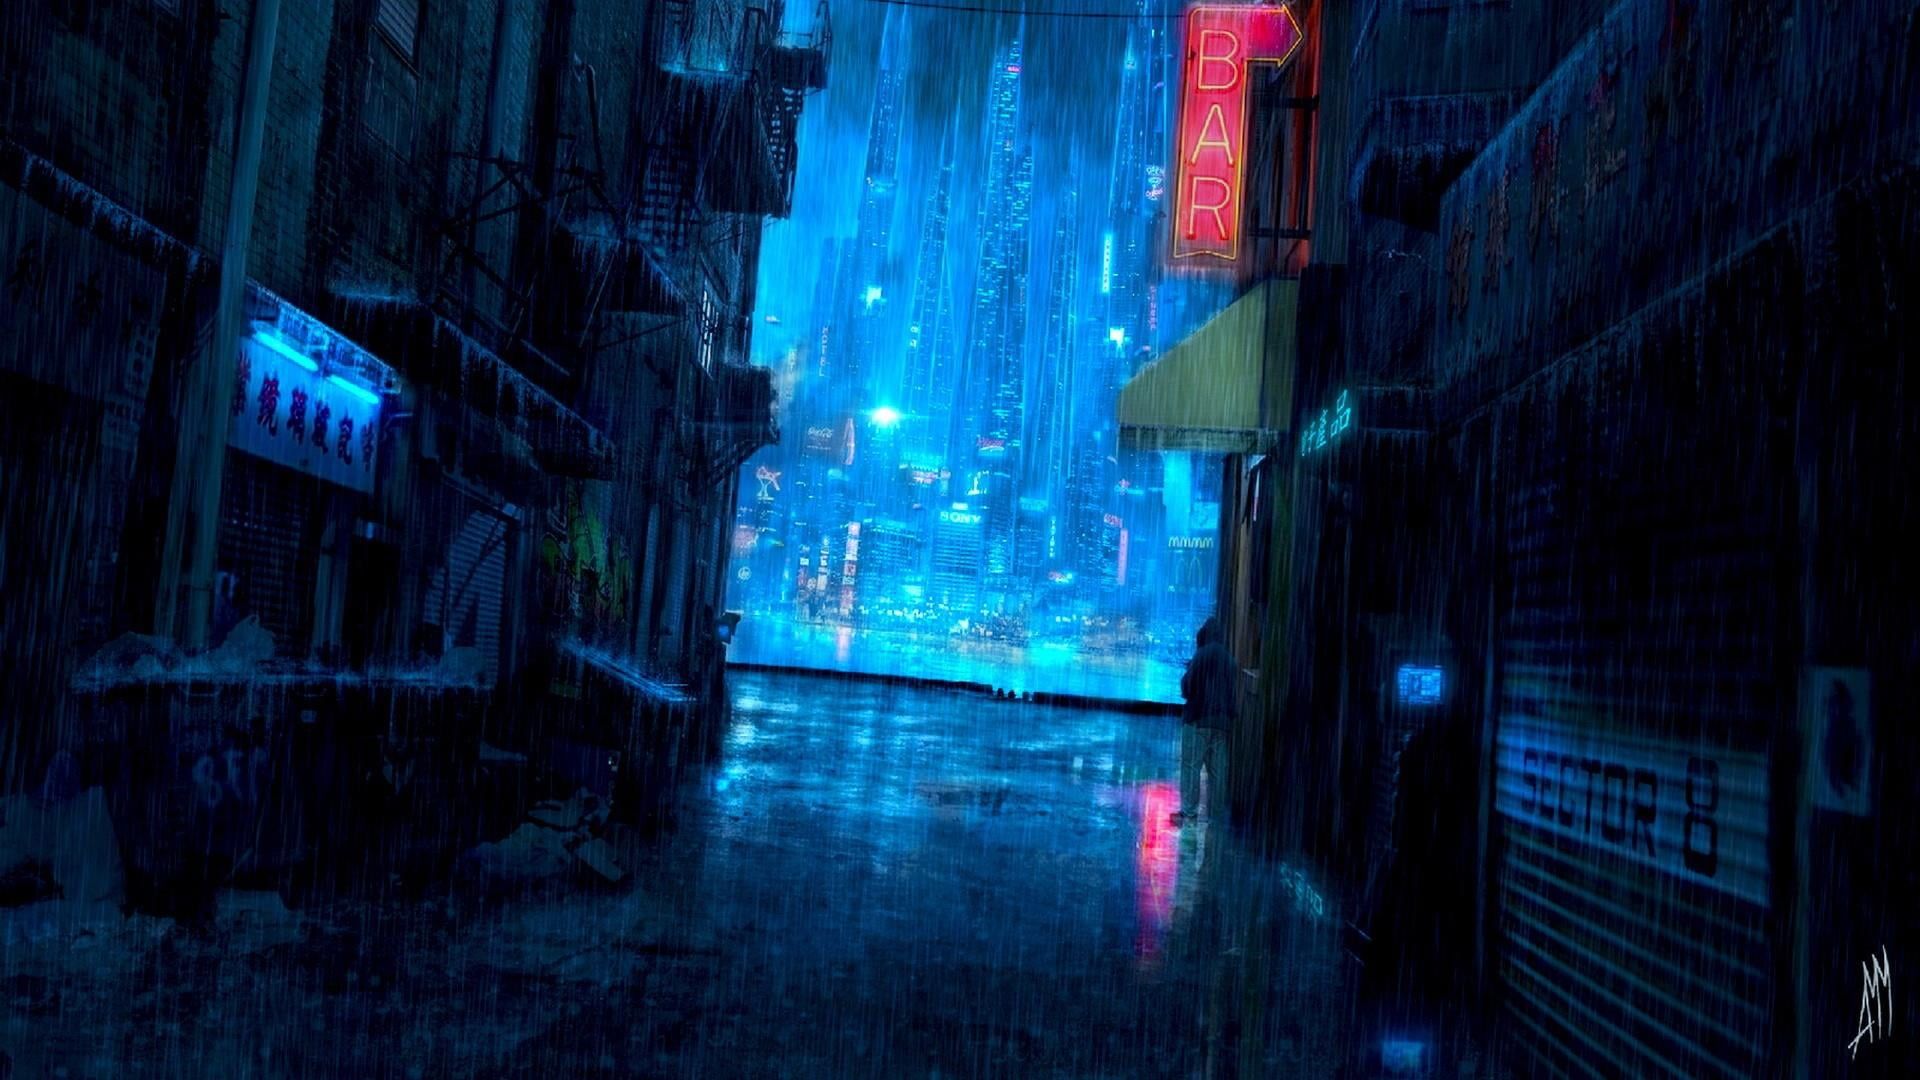 Raining Aesthetic Wallpaper. Scenery wallpaper, Anime scenery wallpaper, Anime background